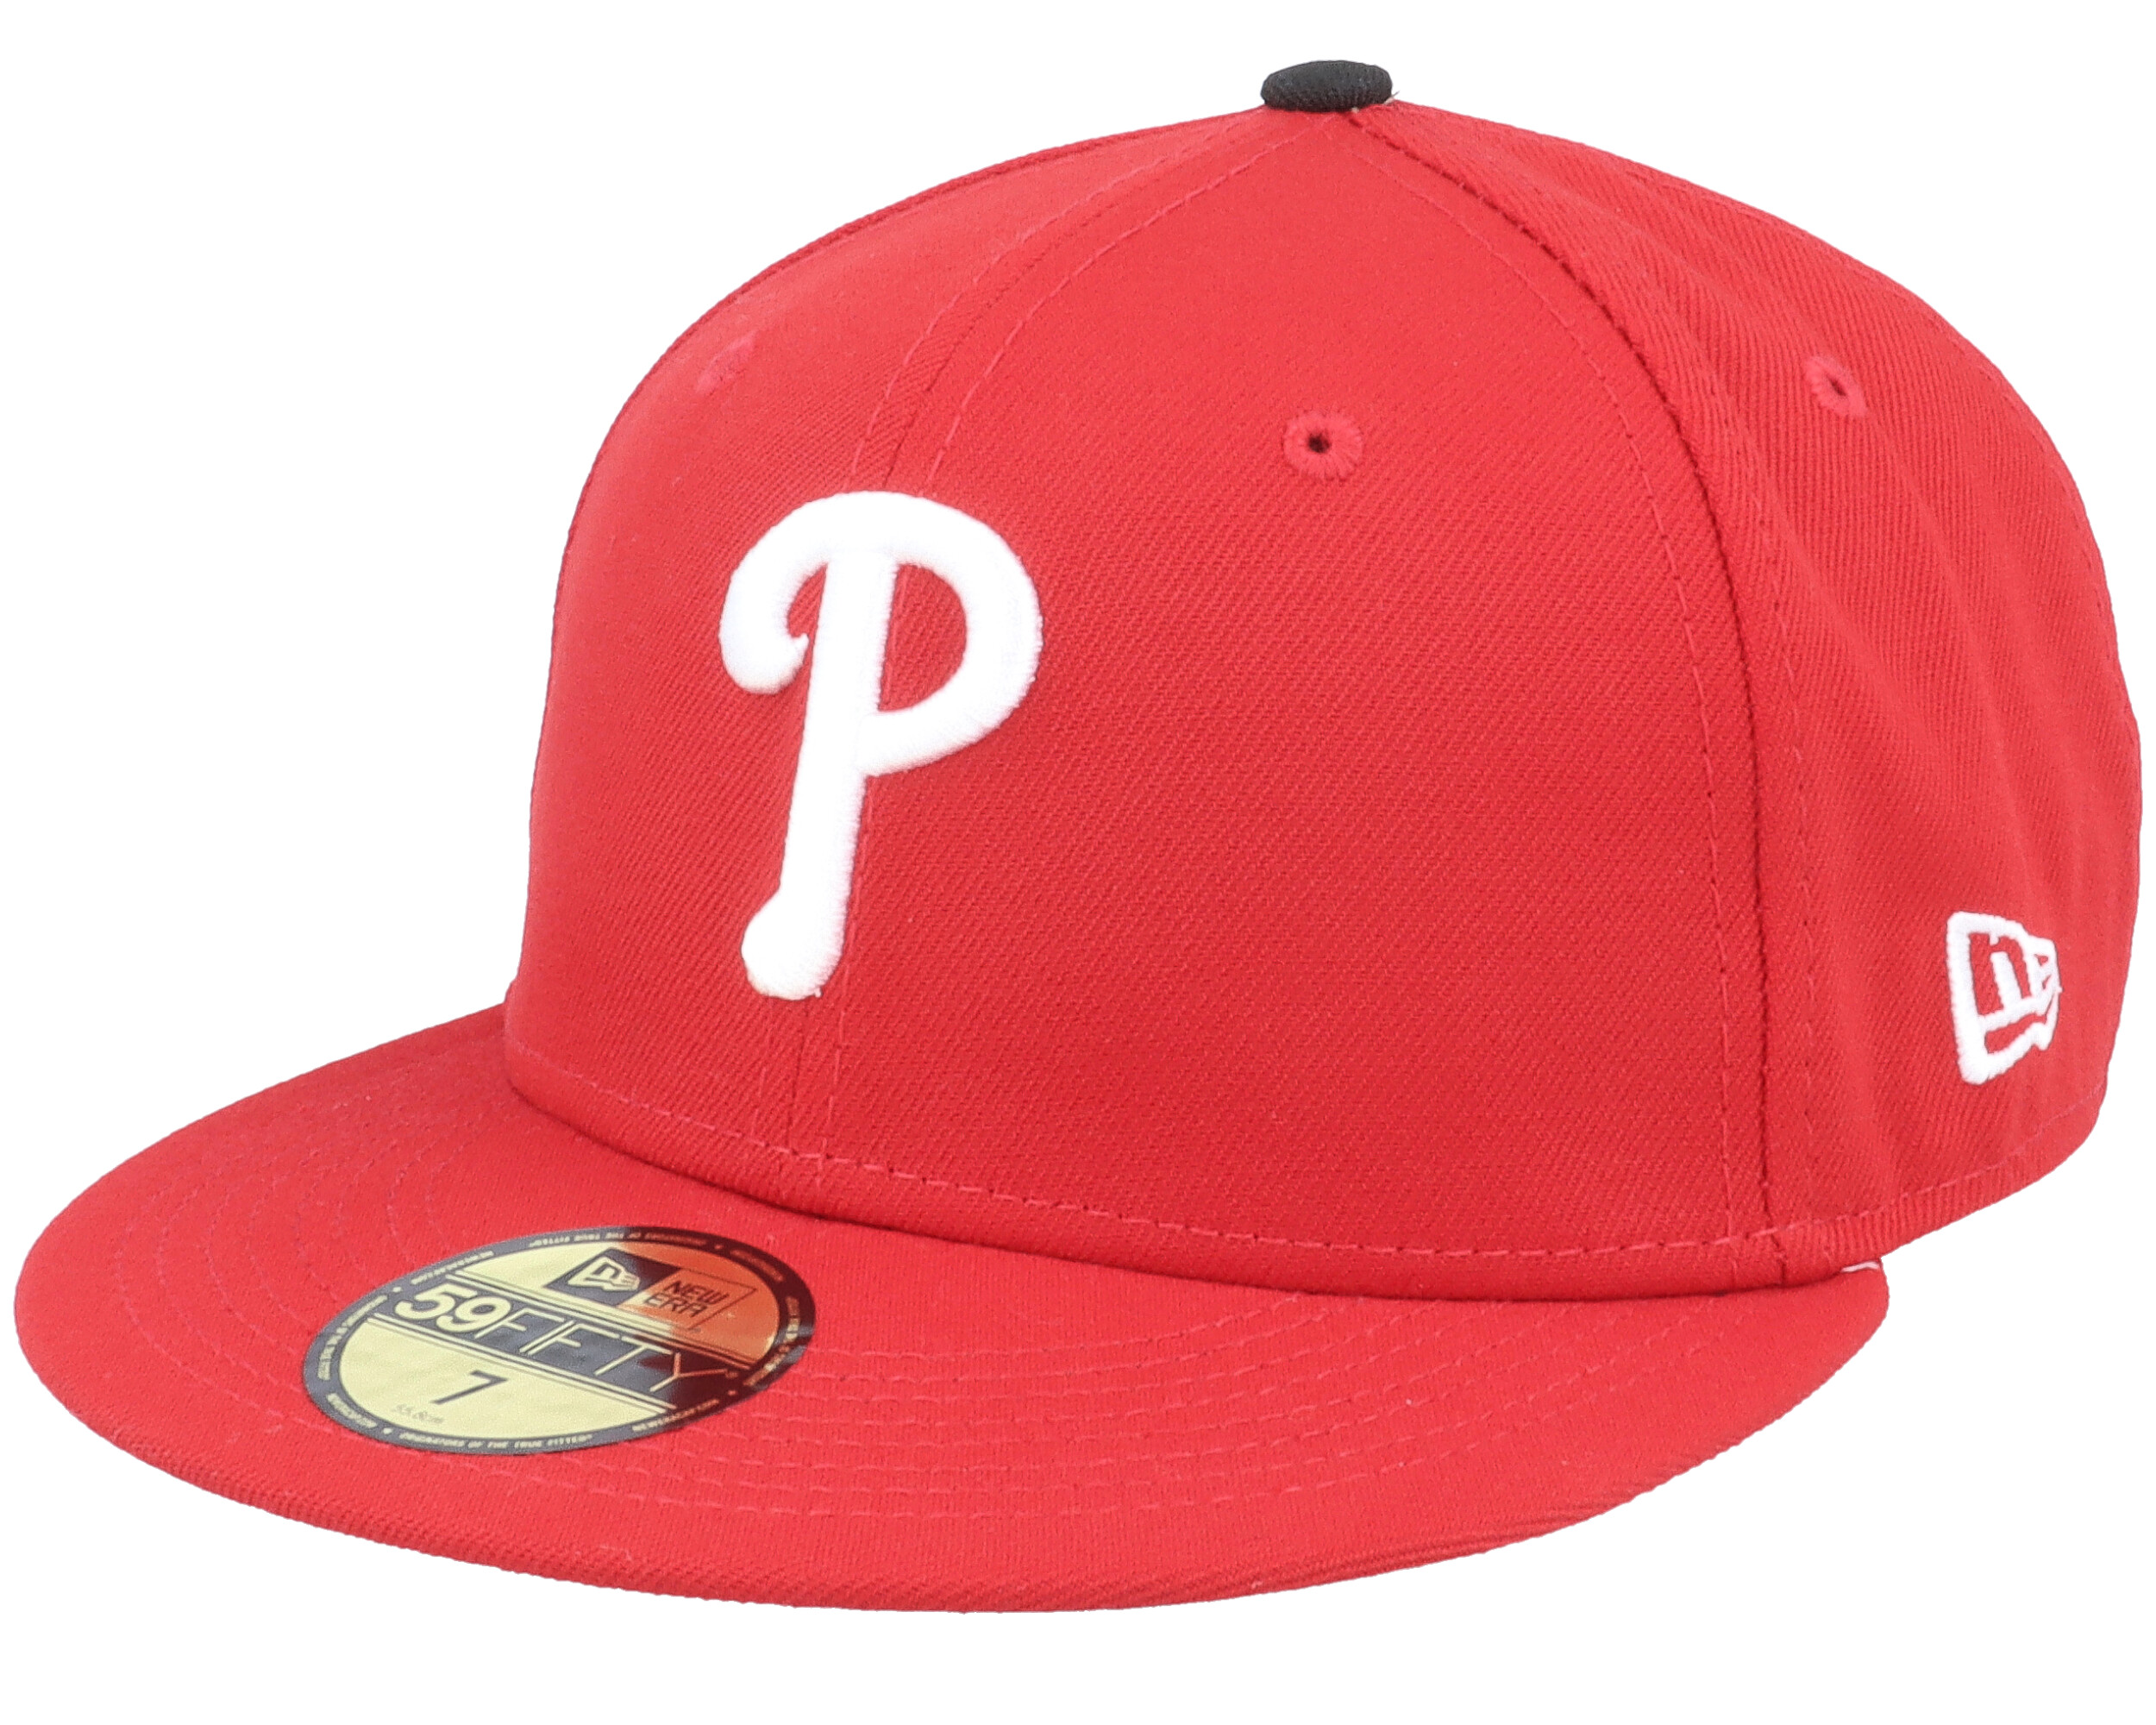 Philadelphia Phillies Caps & Hats Online - Hatstore.ae